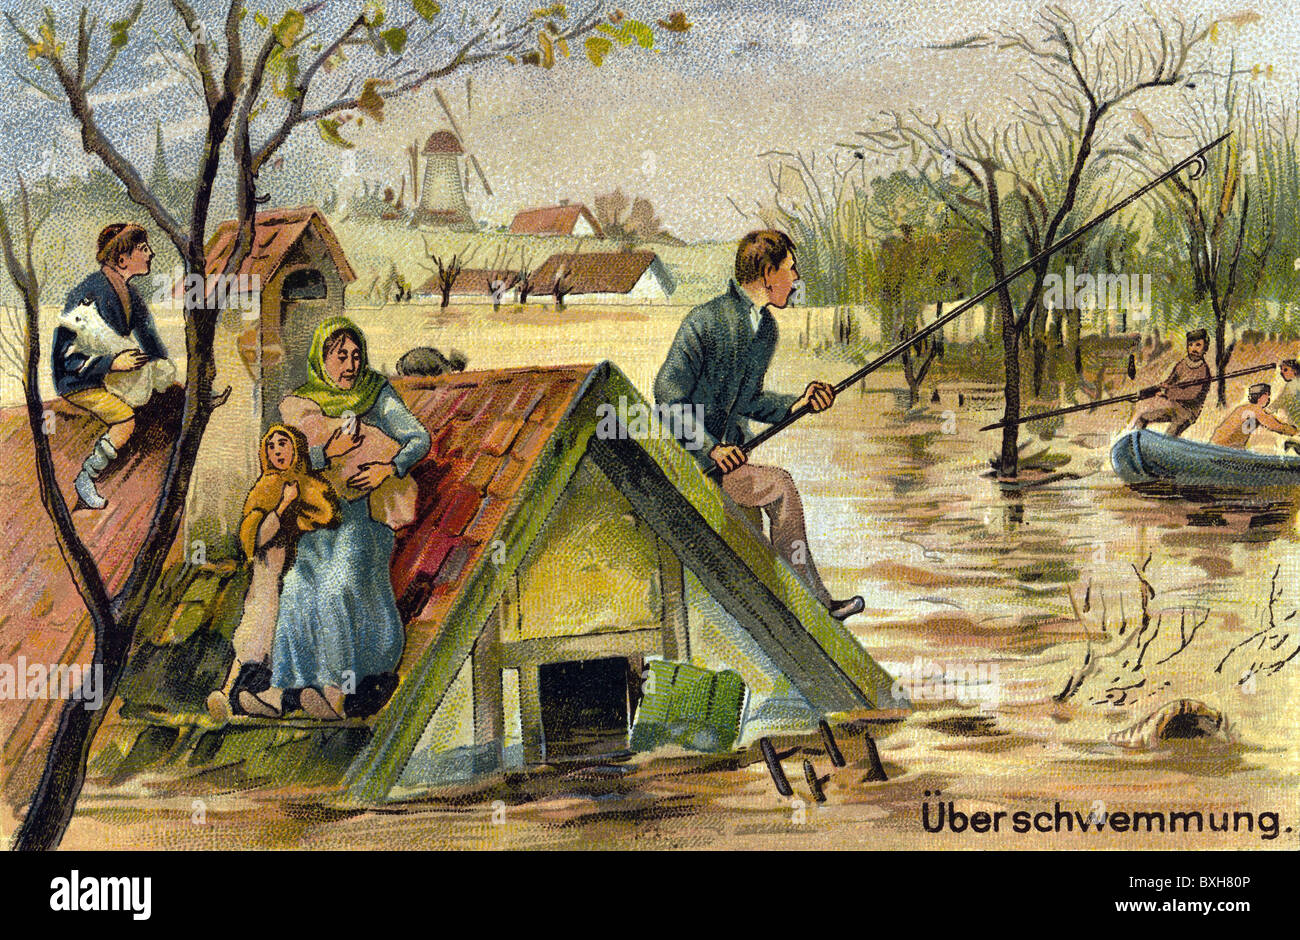 983 Water Flood Sketch Images, Stock Photos & Vectors | Shutterstock